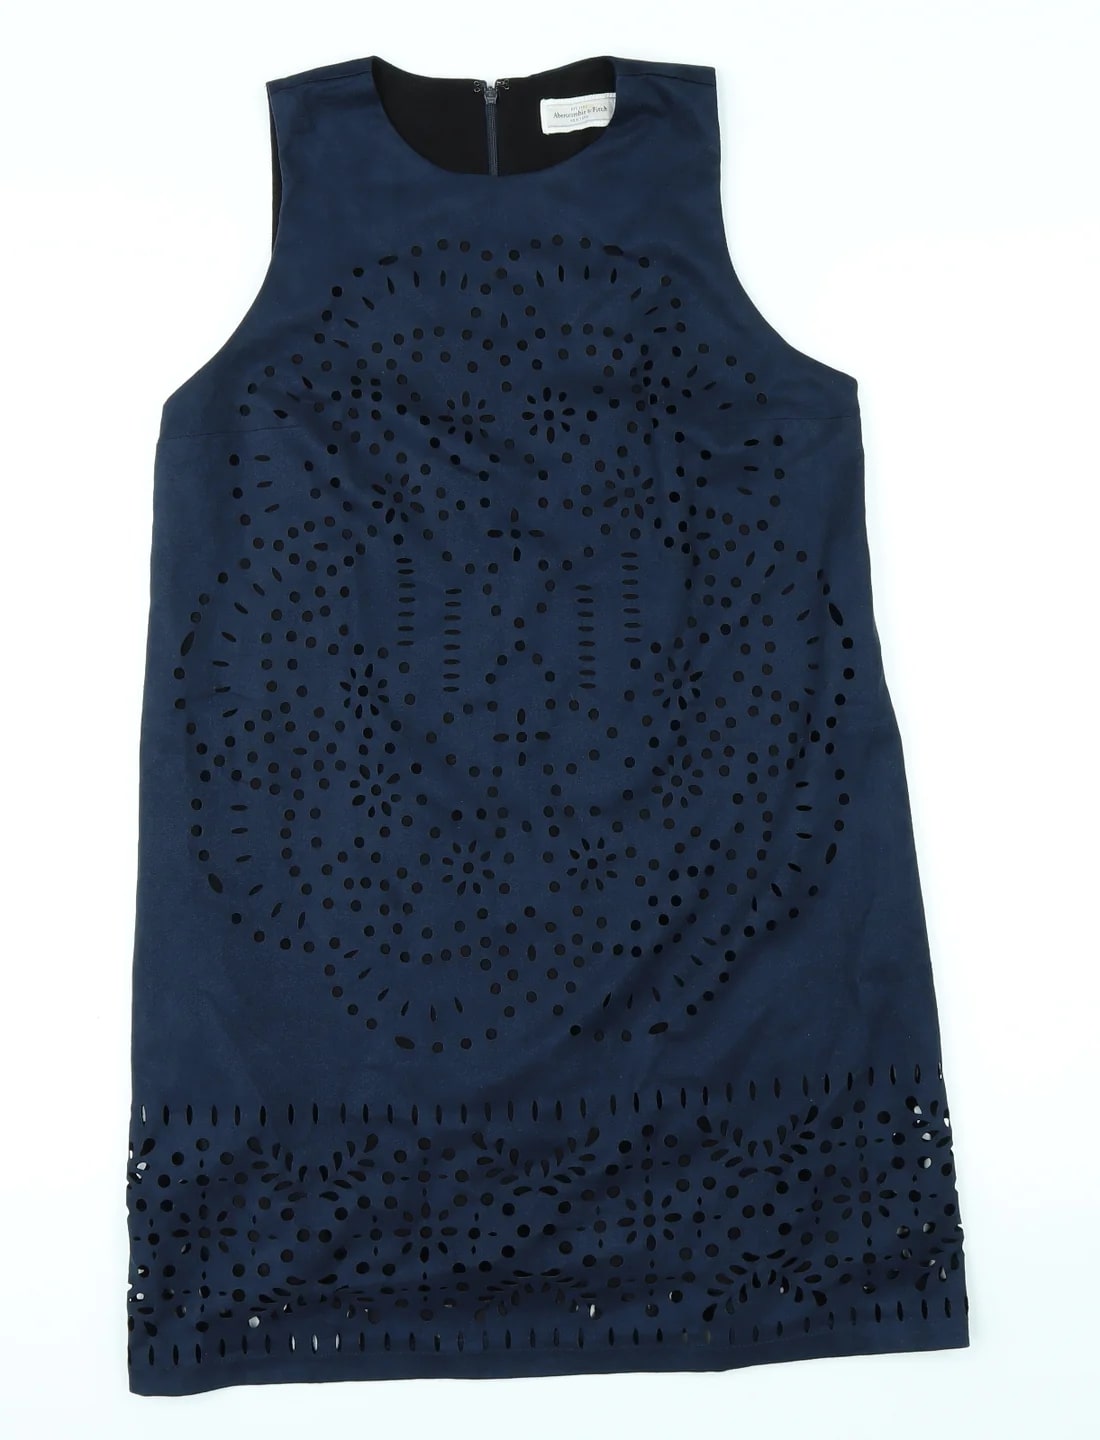 ABERCROMBIE & FITCH Womens Blue Pencil Dress Size M